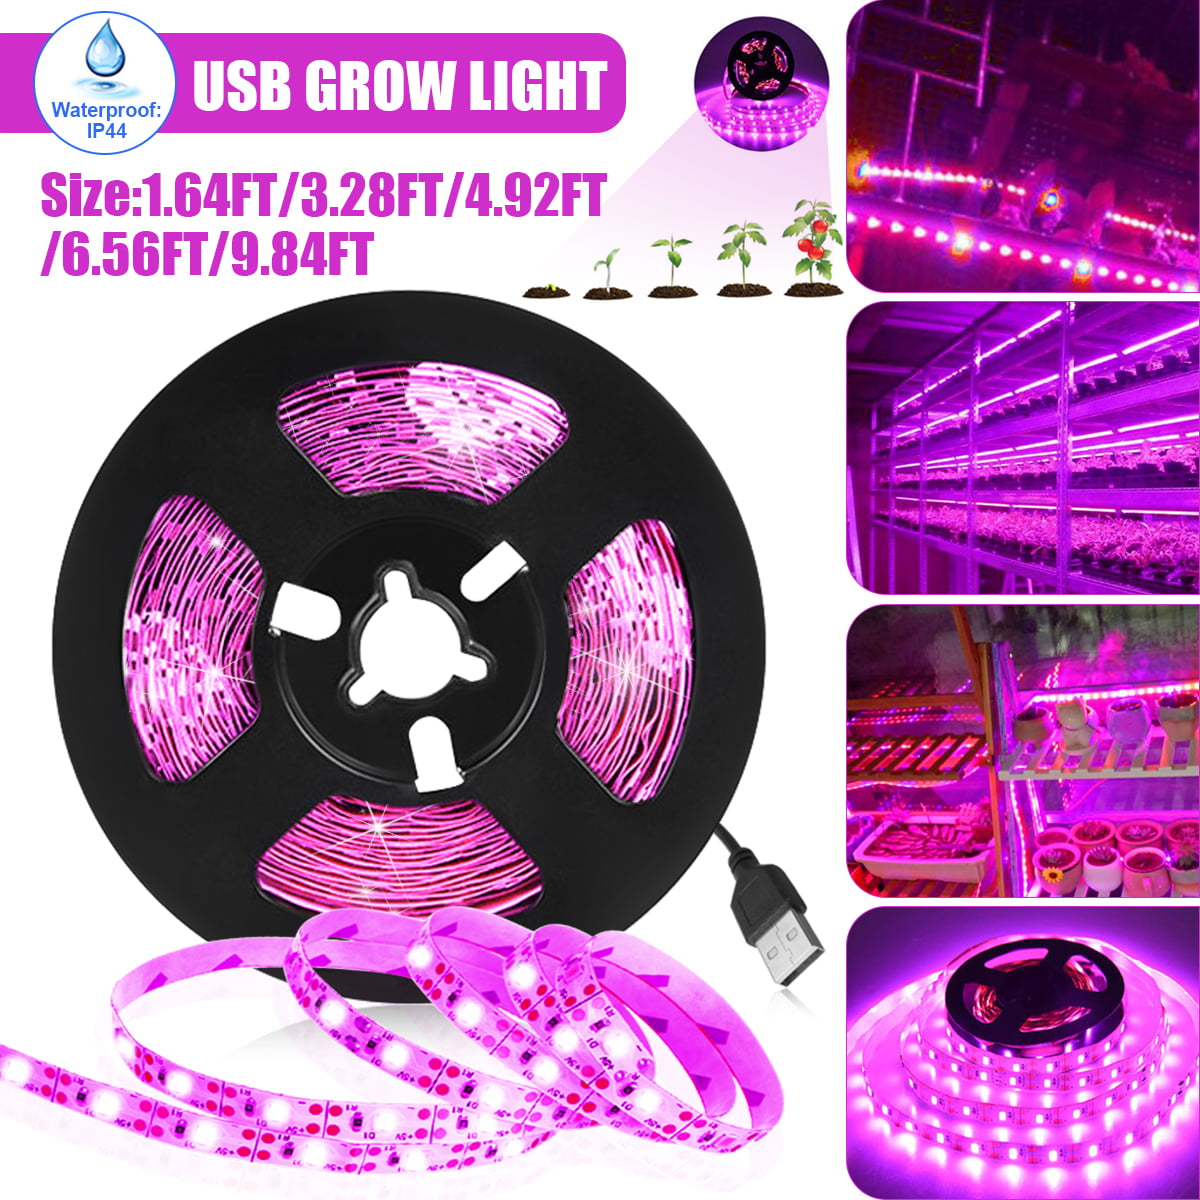 1/2/3M 5V USB 2835 SMD LED Strip Lights Plant Grow Growing Veg Hydroponic Lamp 